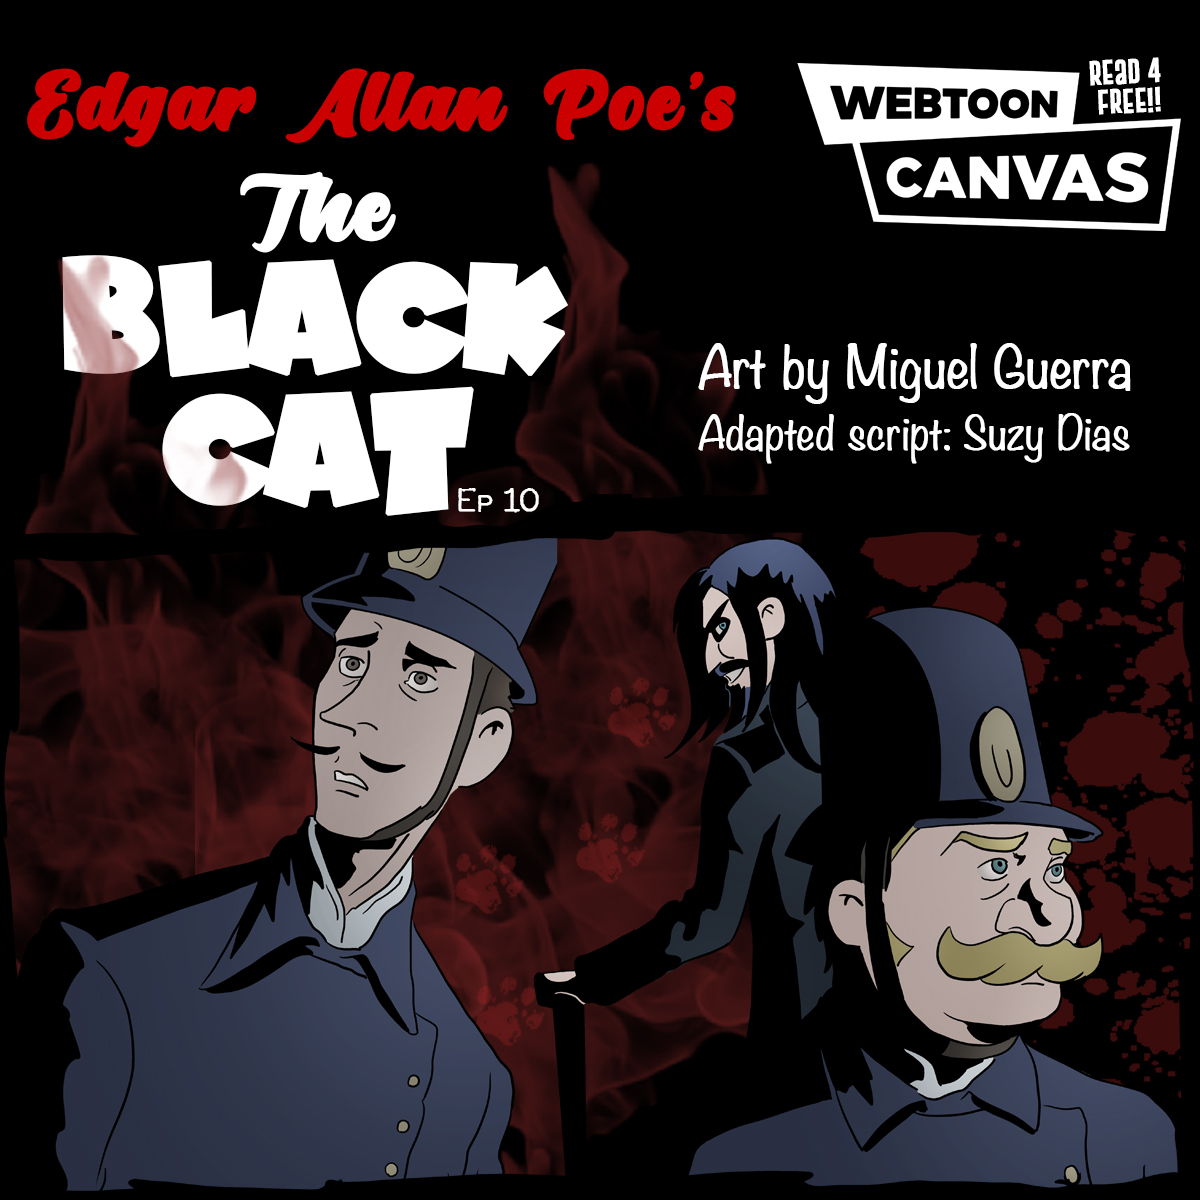 Ghost Metal on Webtoon: The Black Cat ep10